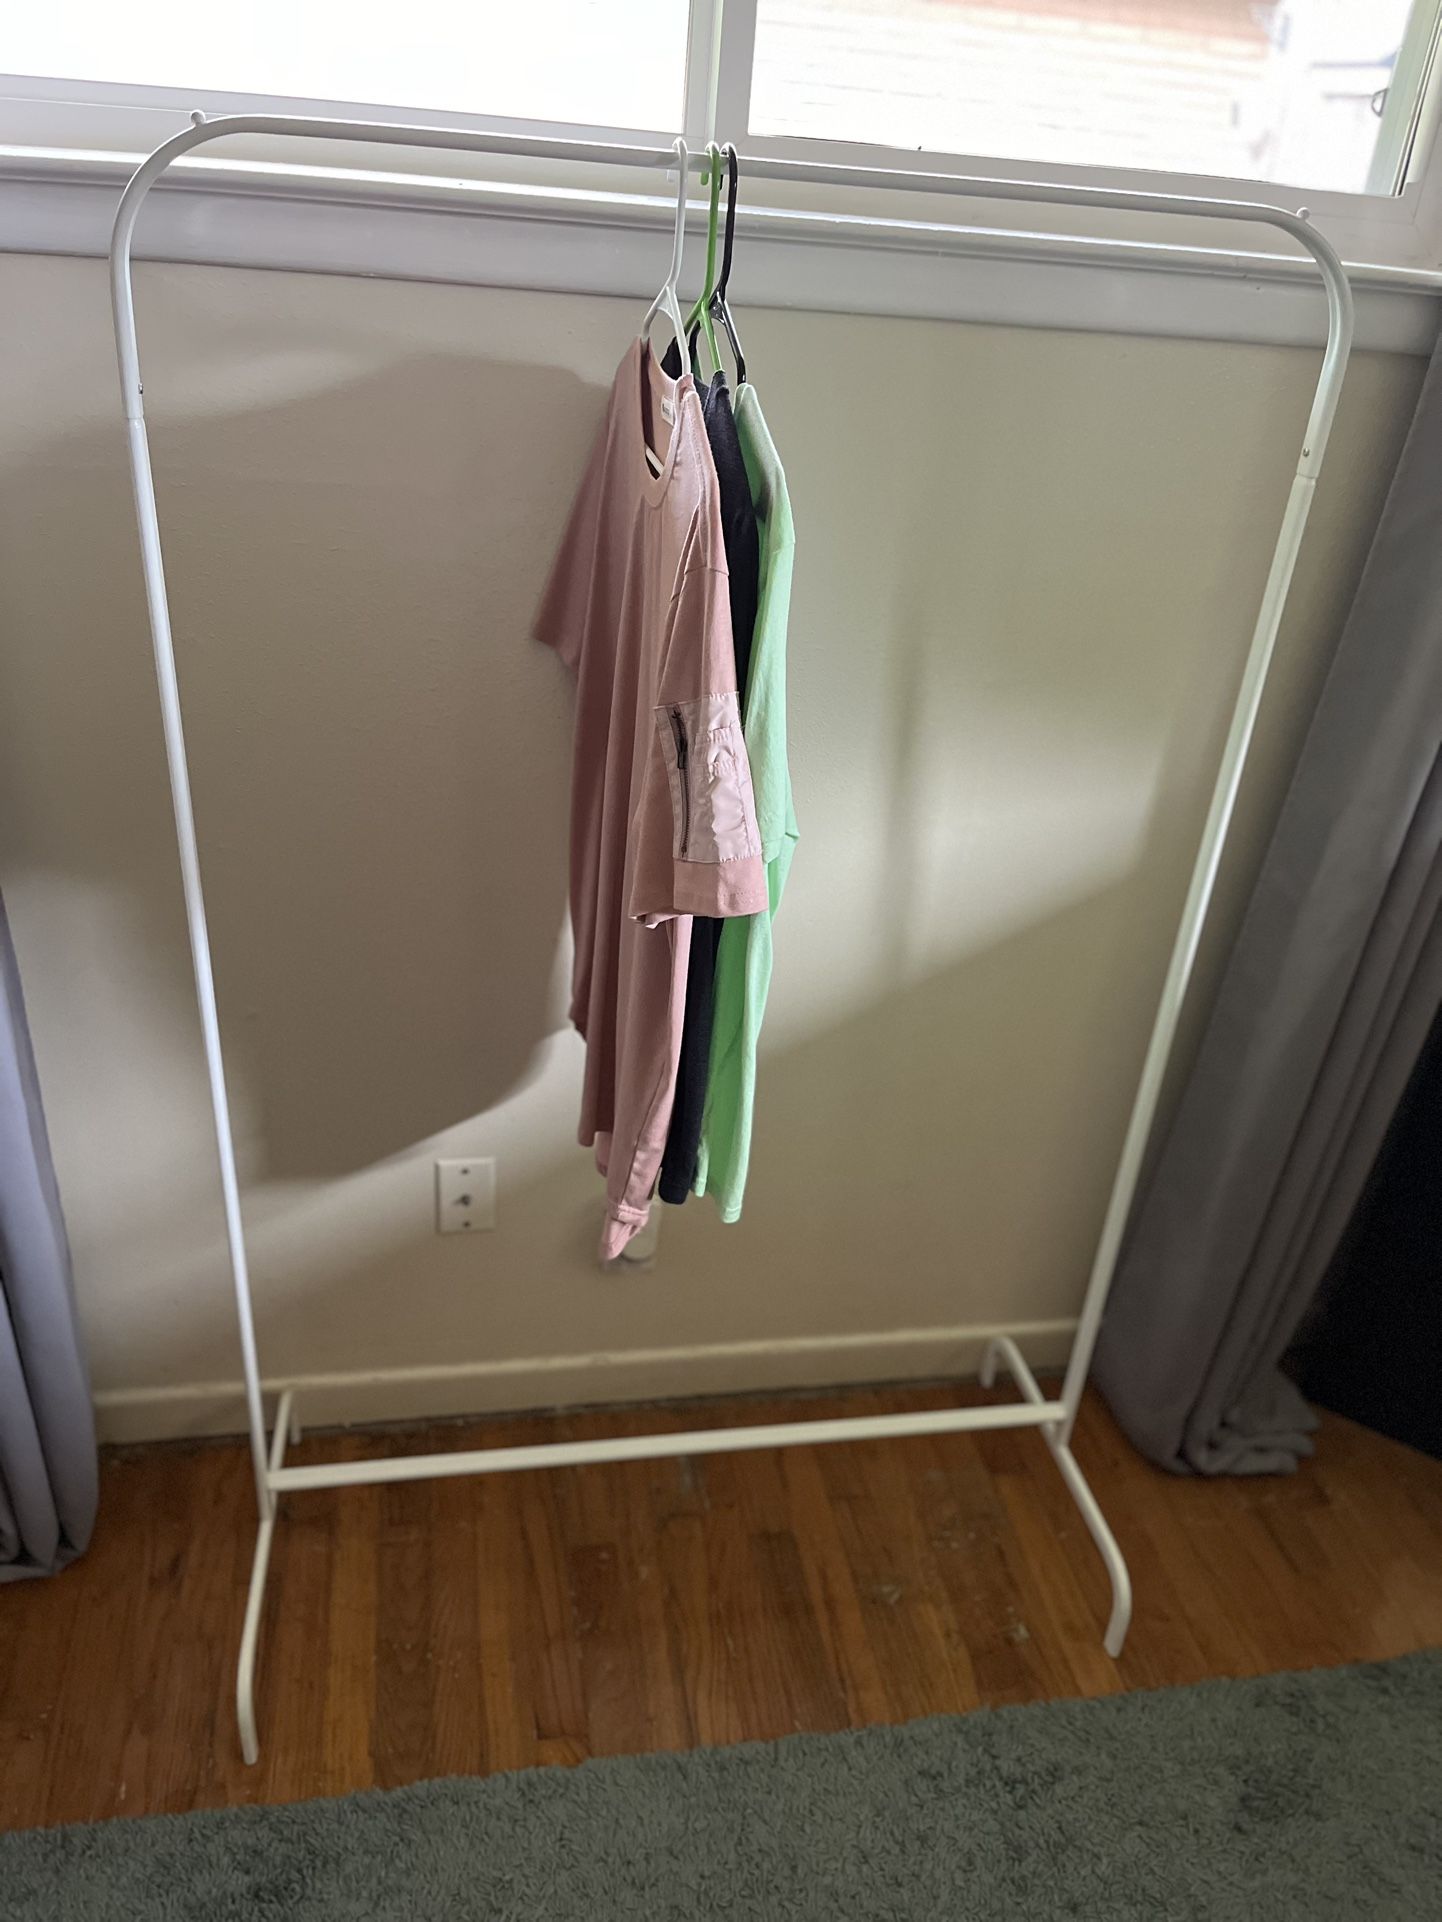 IKEA Clothing Rack